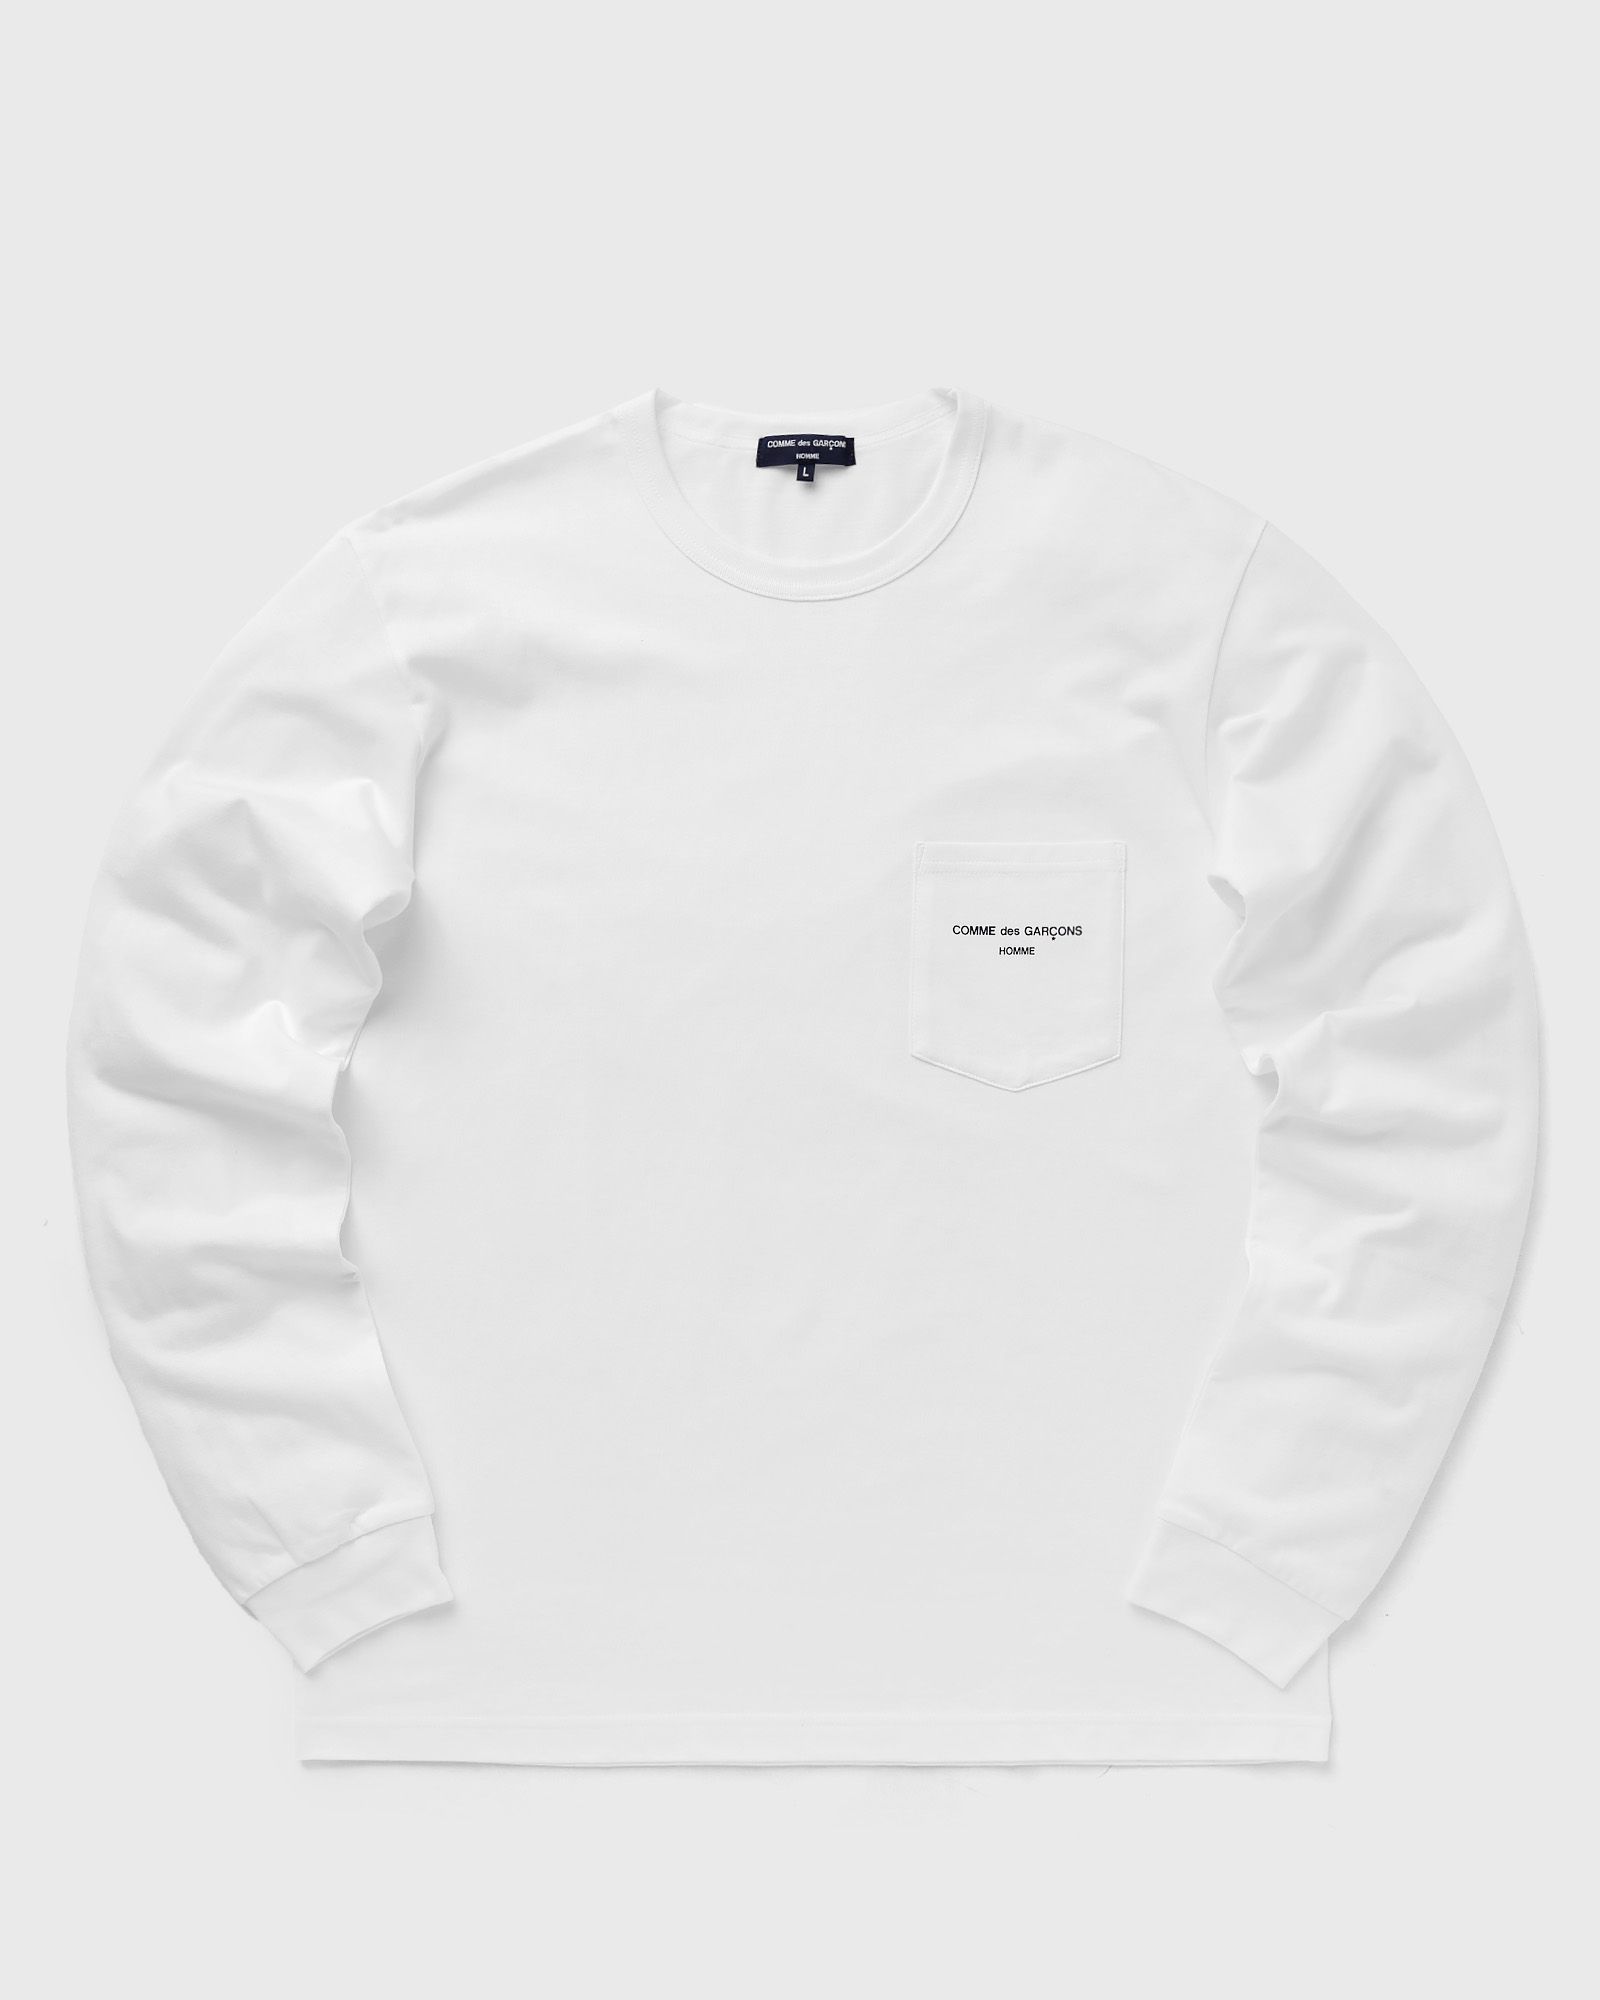 Comme des Garçons Homme - logo ls t-shirt men longsleeves white in größe:xl